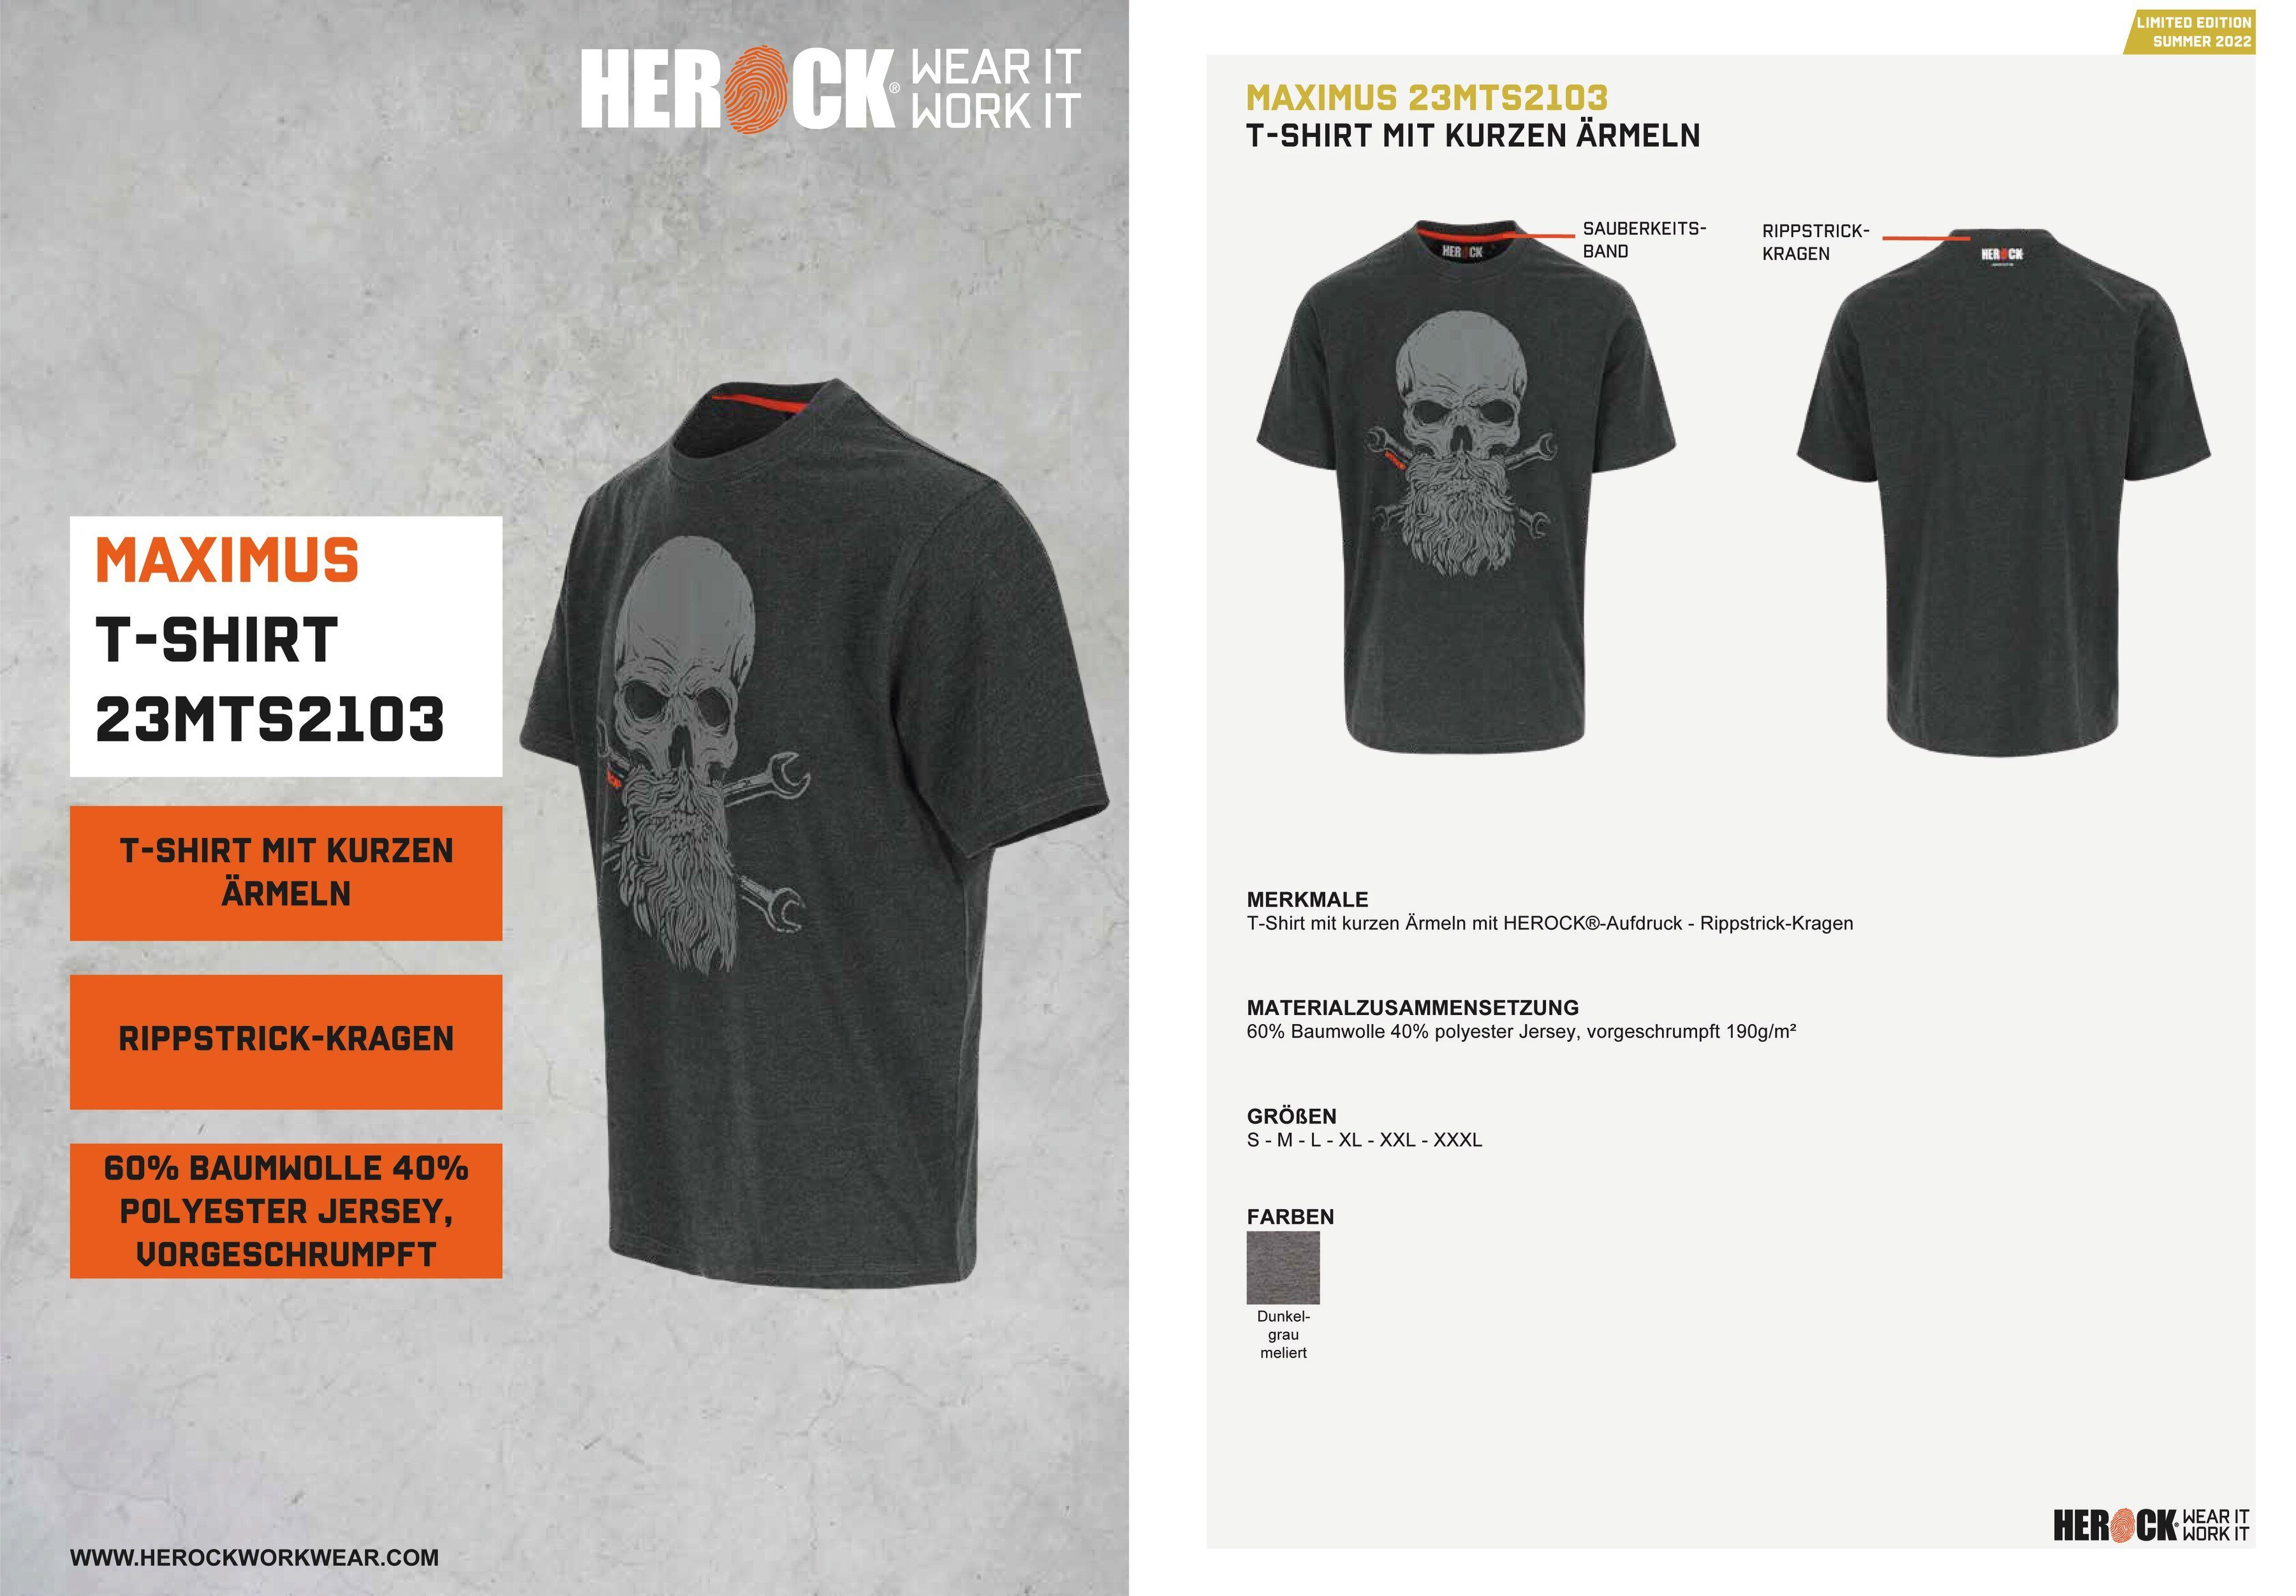 Limited Maximus Herock Edition T-Shirt